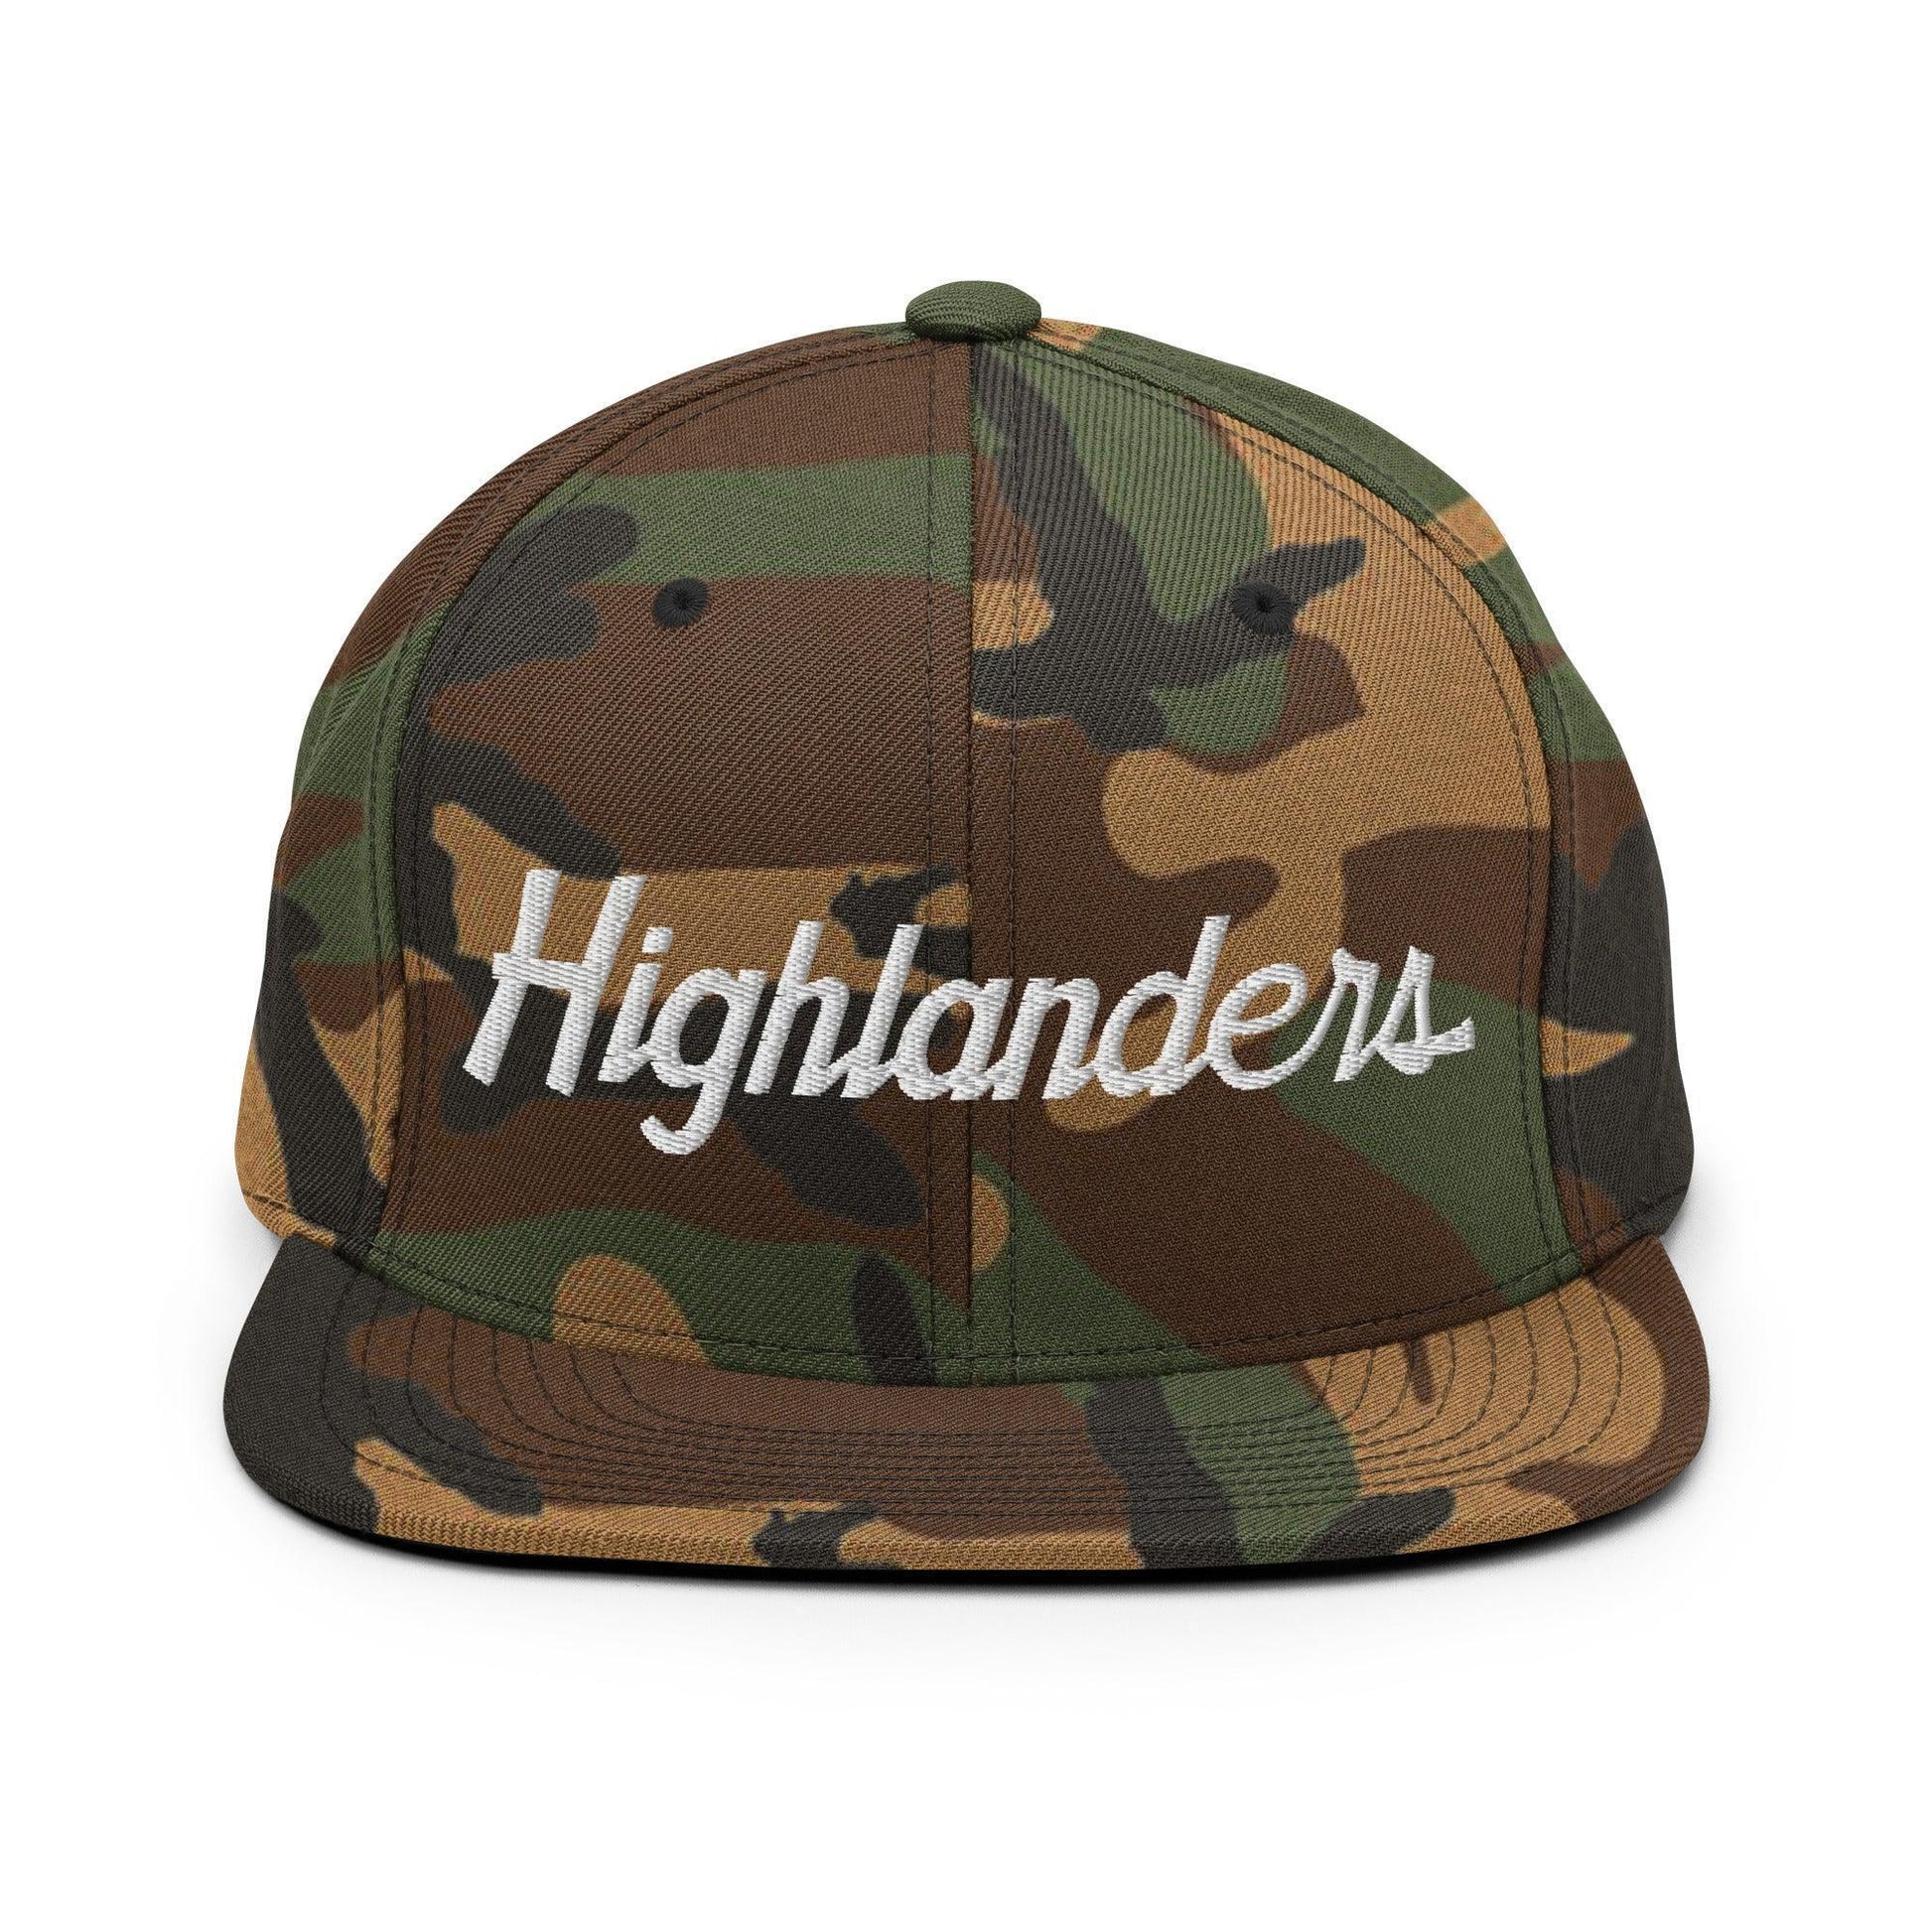 Highlanders School Mascot Script Snapback Hat Green Camo